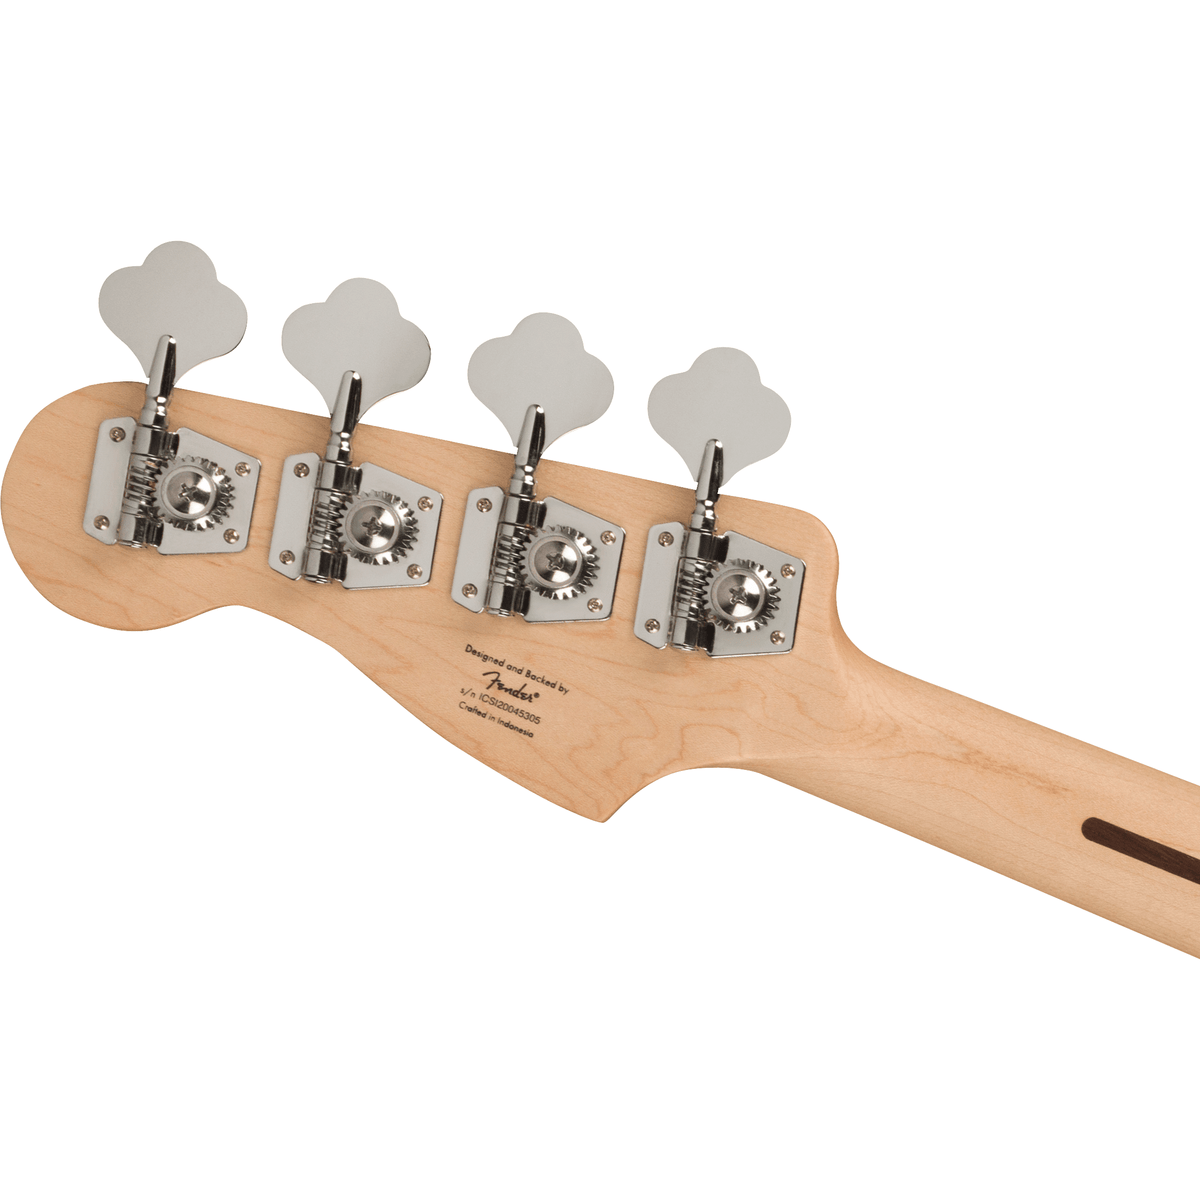 Squier Guitar Fender Squier Affinity Precision Bass PJ Package Black - Byron Music